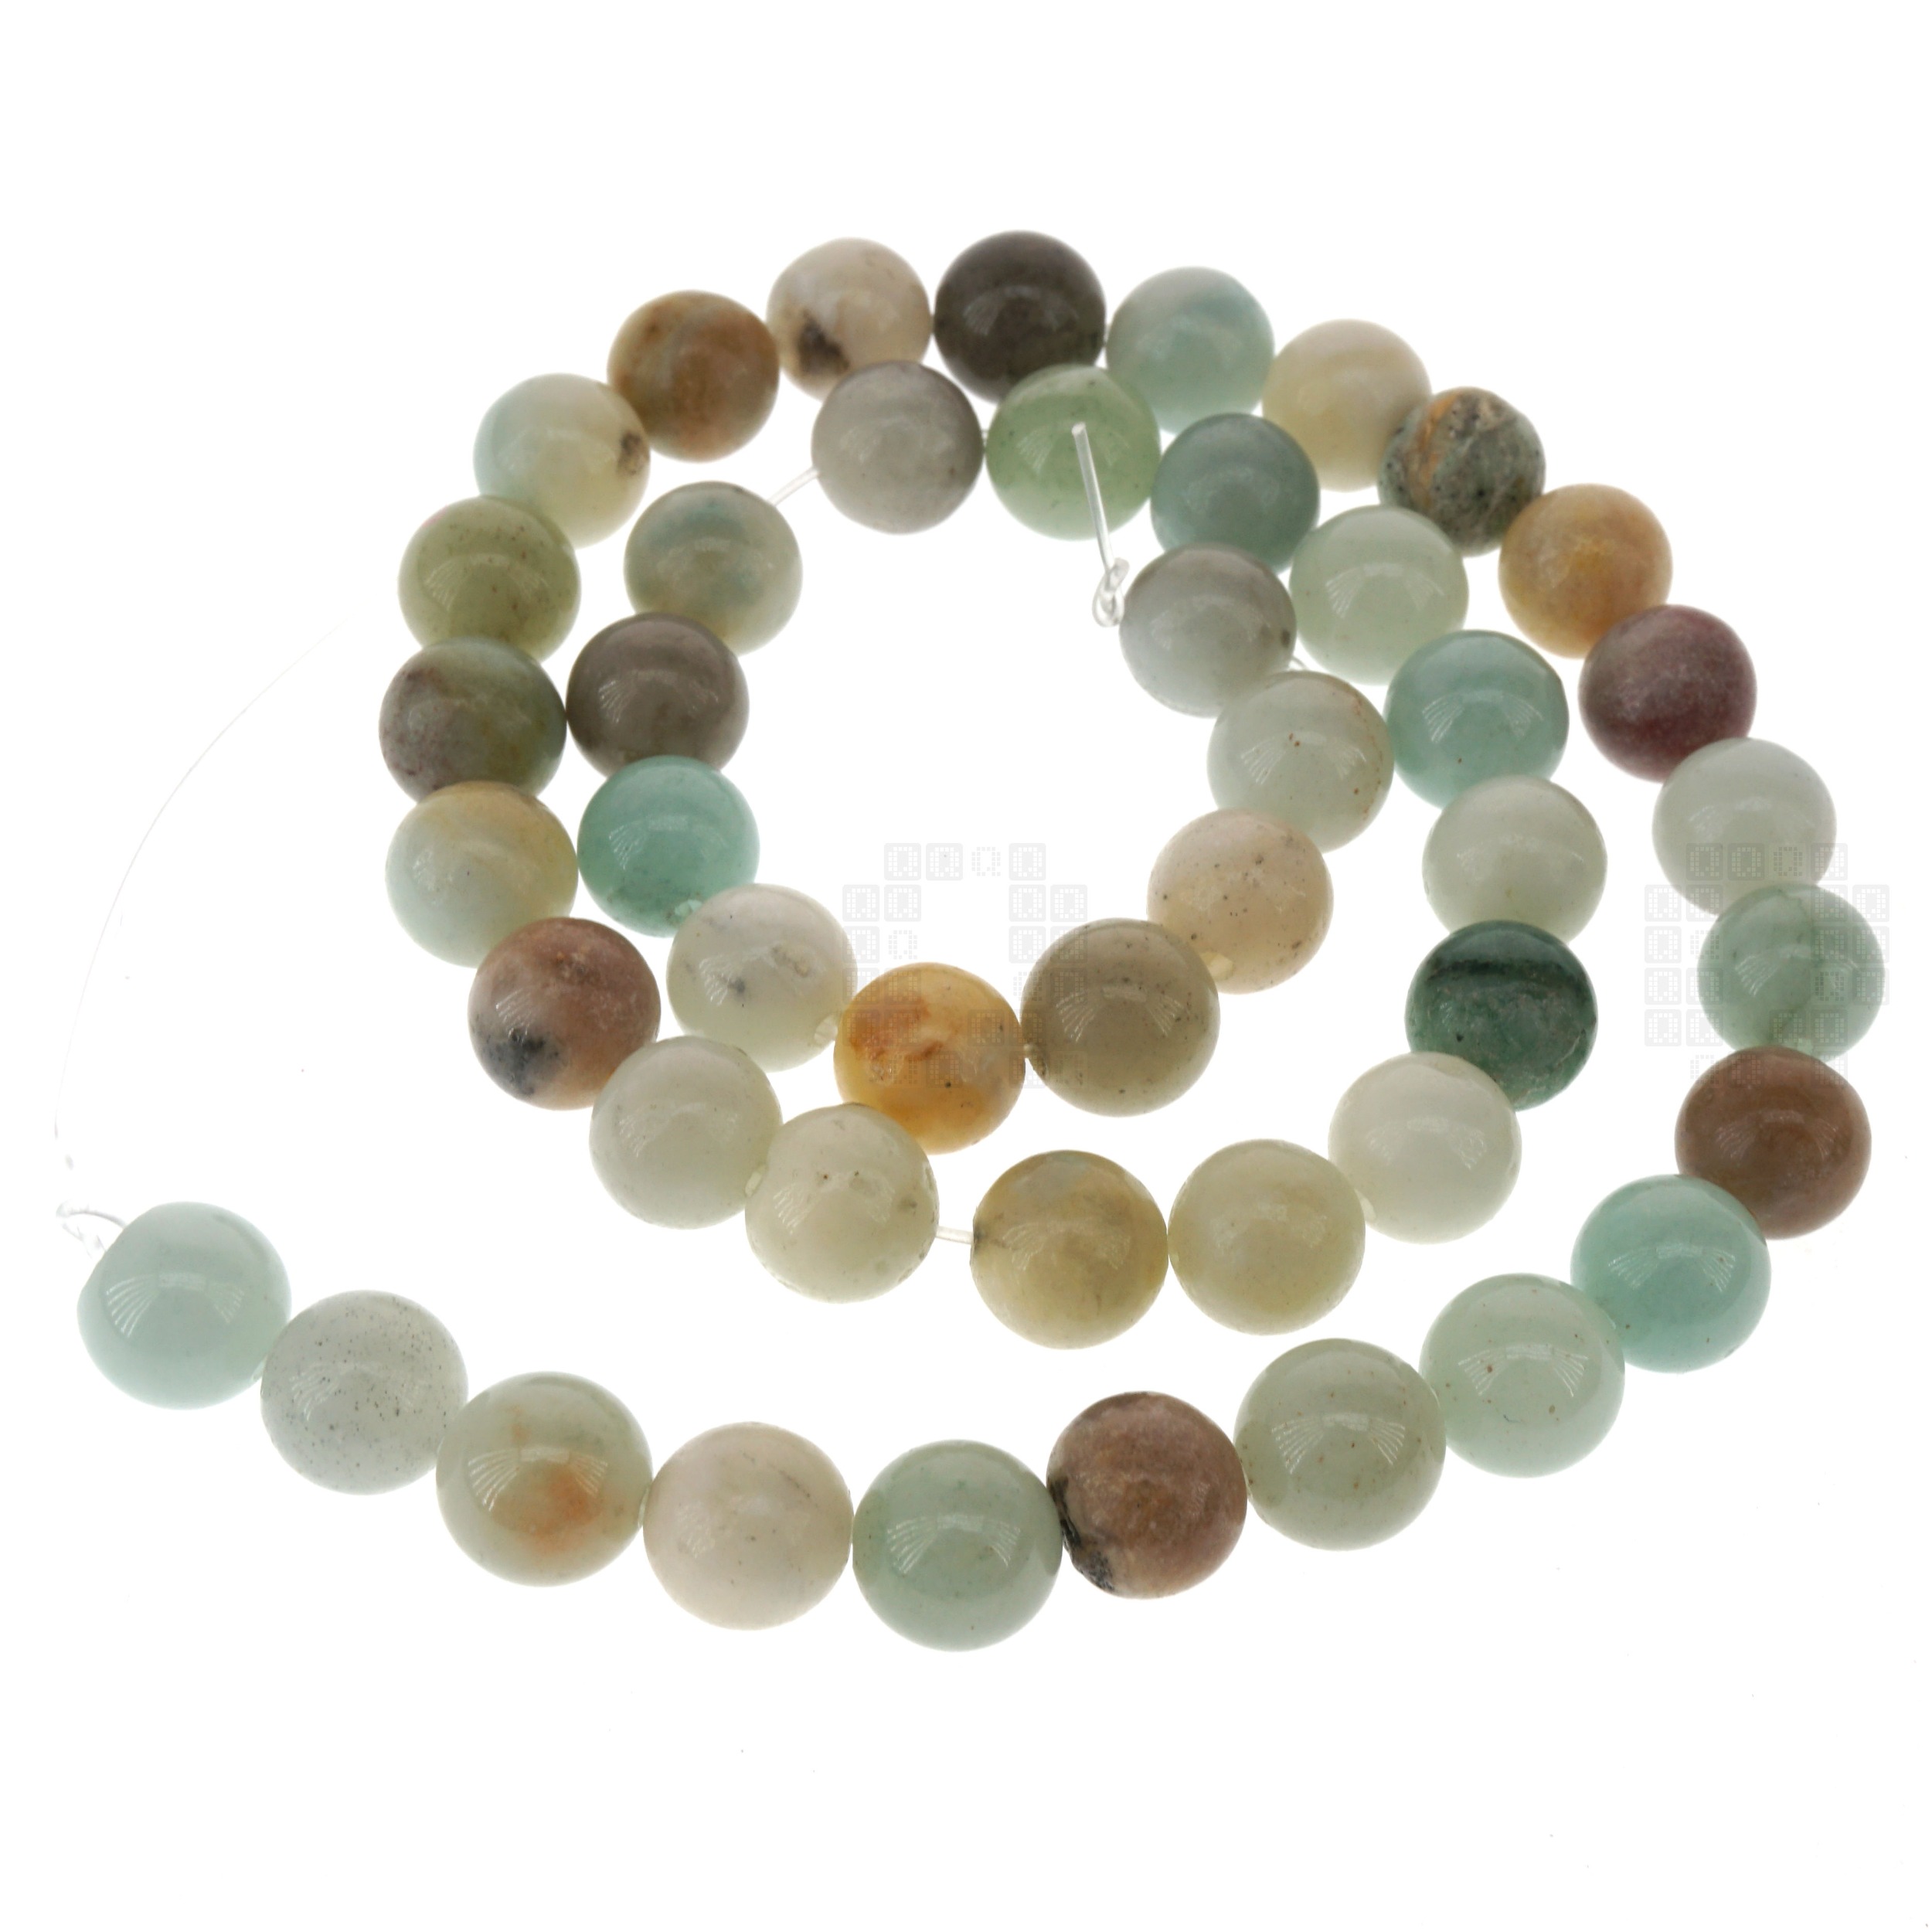 Amazonite 8mm Round Glass Beads, 45 Pieces